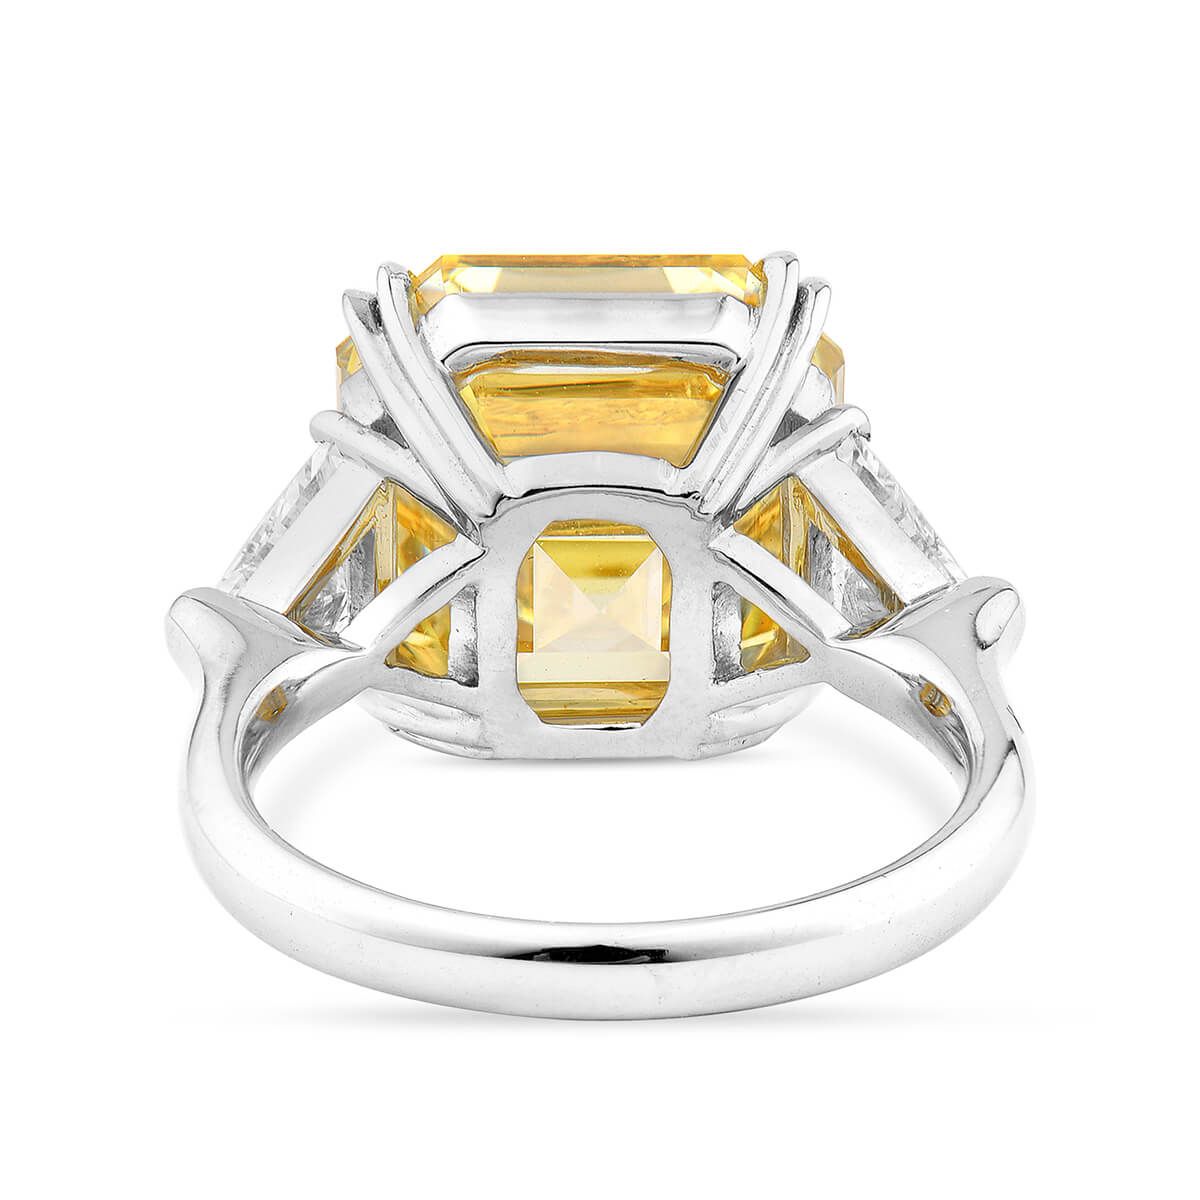 Fancy Yellow Diamond Ring, 10.02 Ct. (10.69 Ct. TW), Asscher shape, GIA Certified, 2191251604